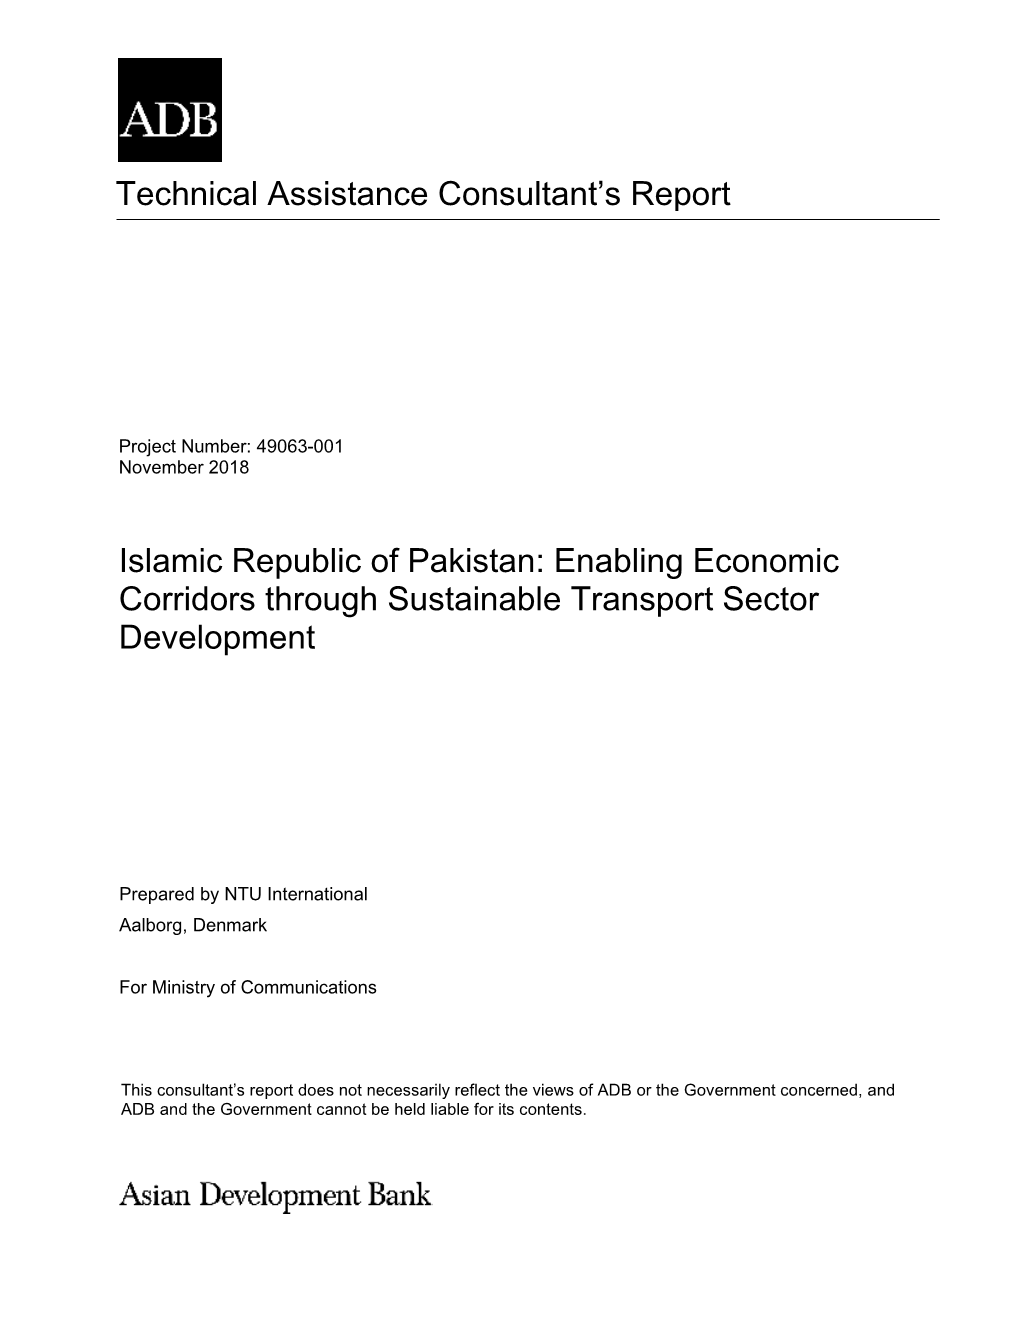 49063-001: Enabling Economic Corridors Through Sustainable